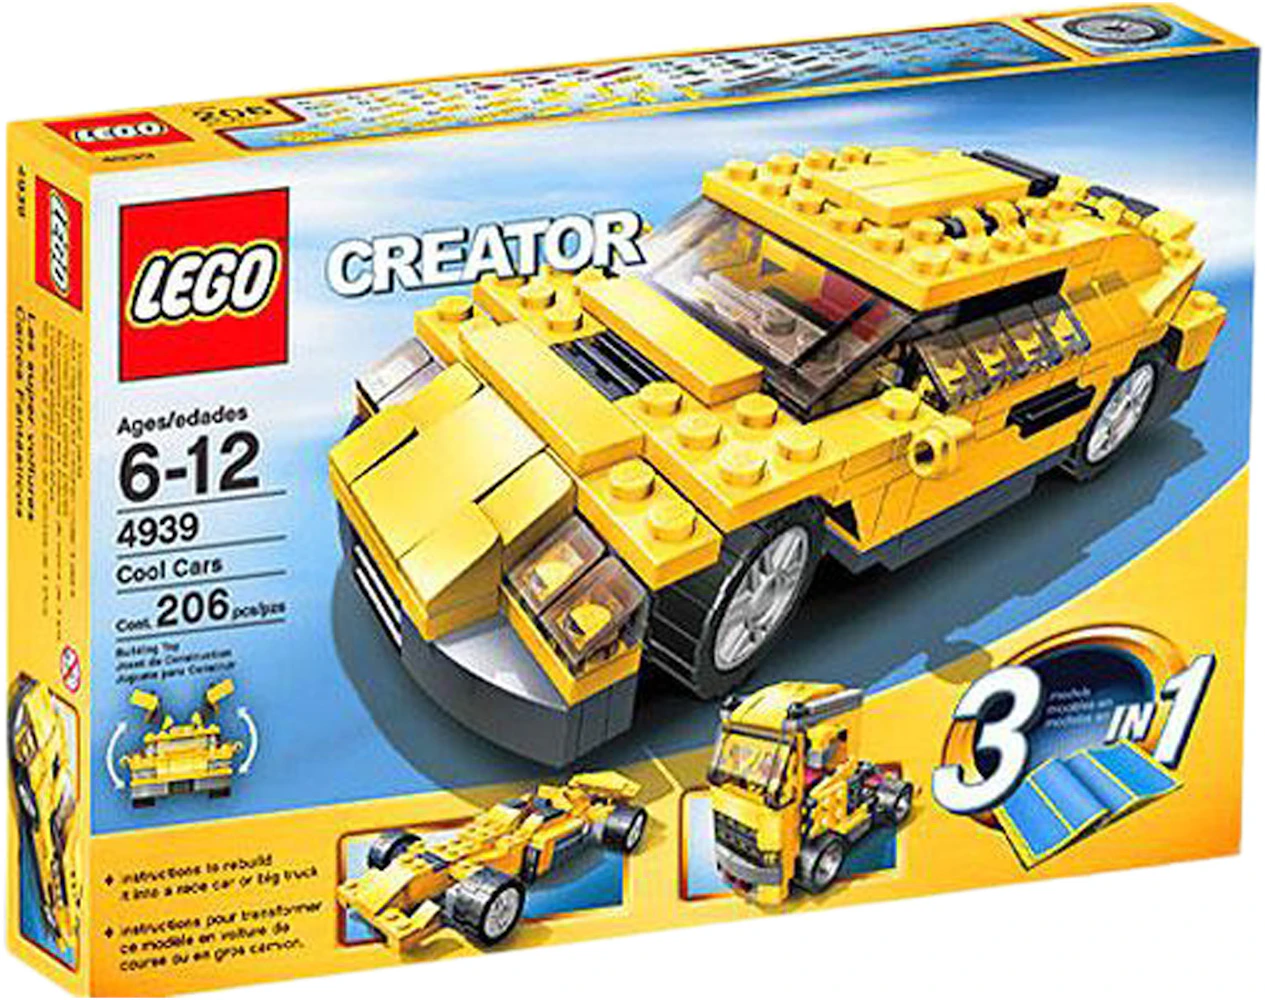 mode assimilation passe LEGO Creator Cool Cars Set 4939 - US